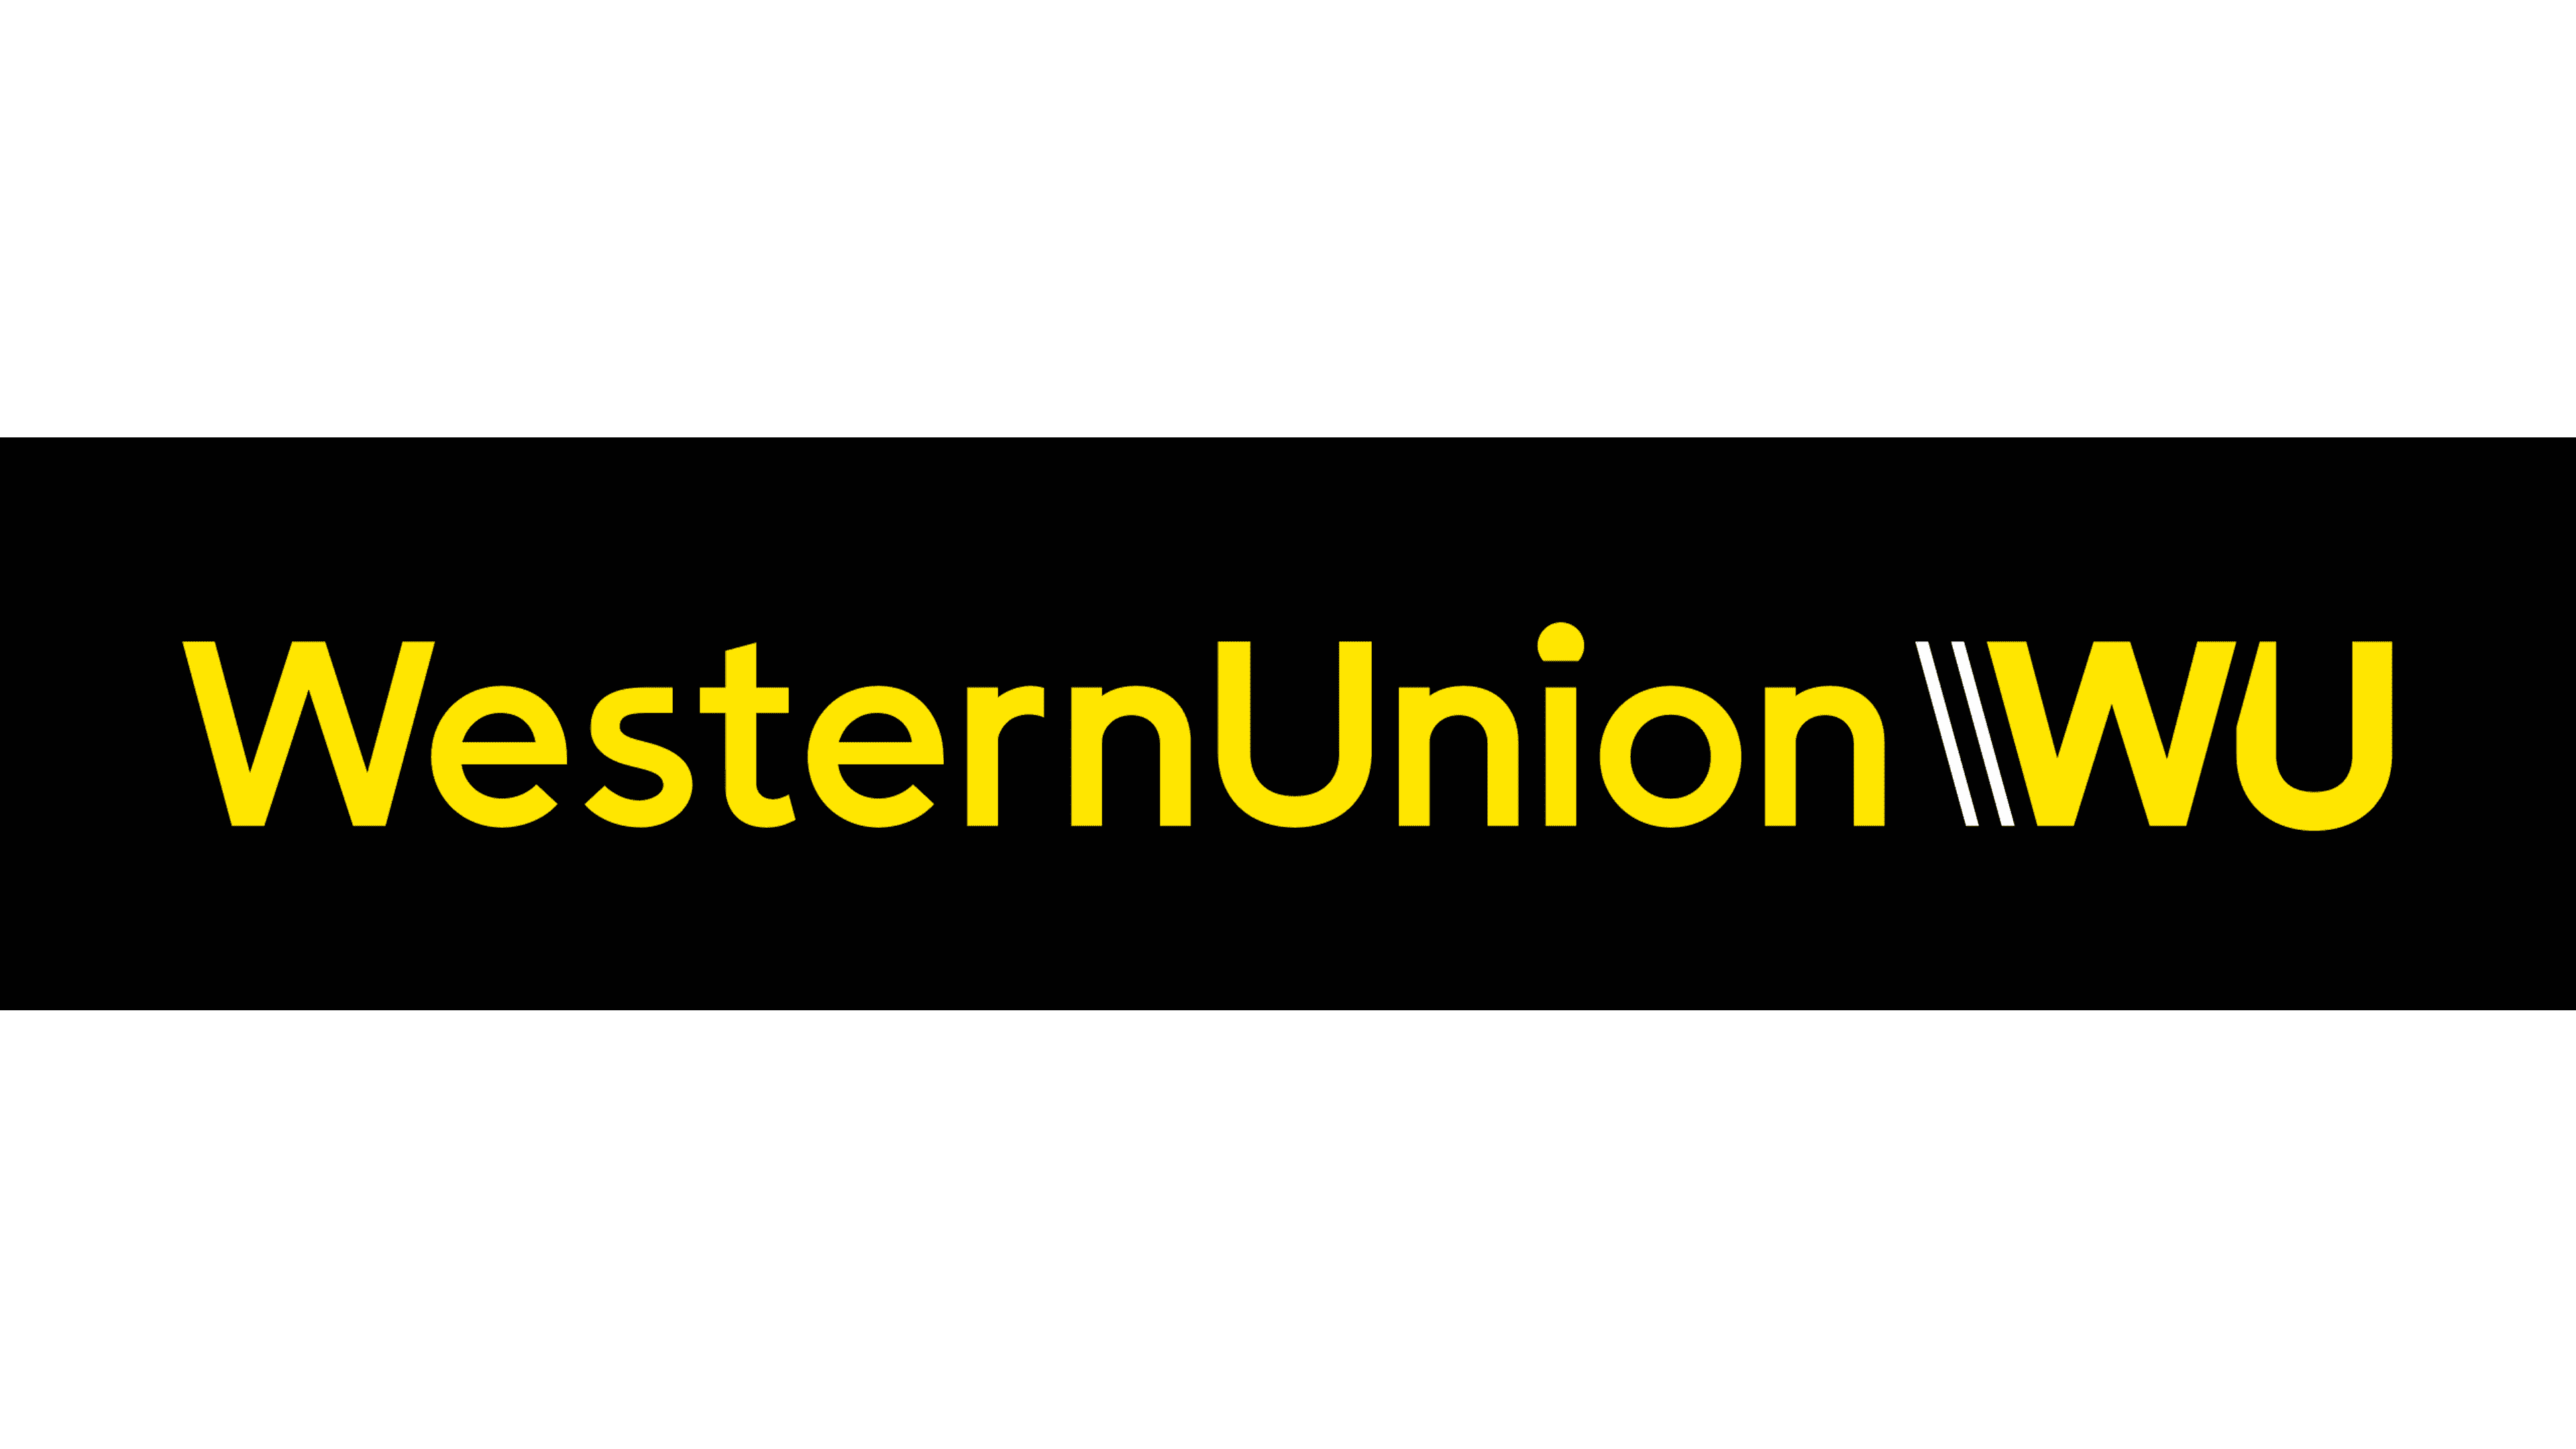 File:Western Union WU LOGO.jpg - Wikimedia Commons